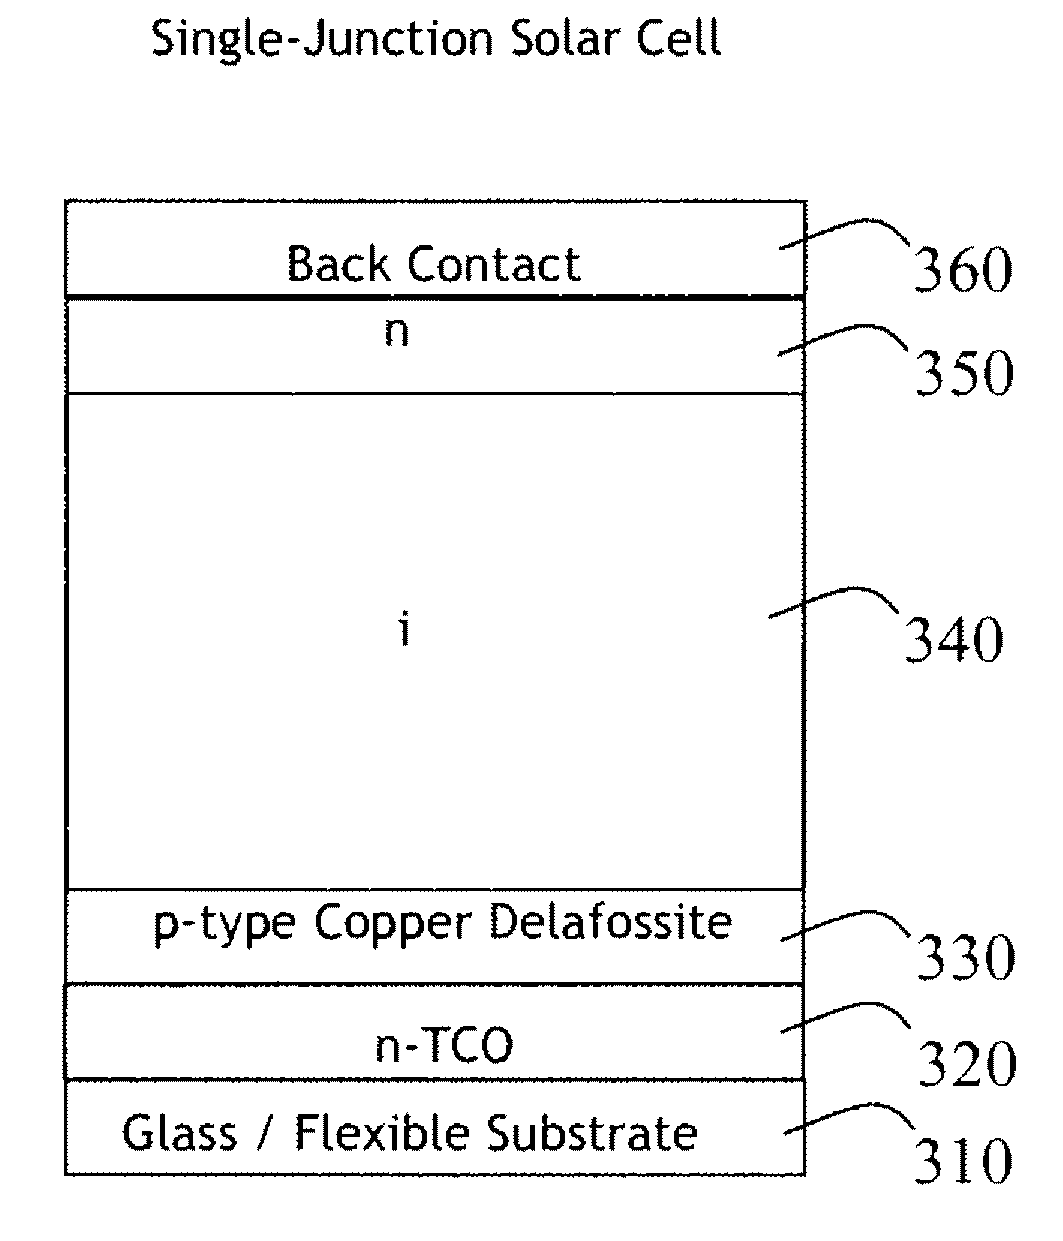 Copper delafossite transparent p-type semiconductor materials for dye sensitized solar cells